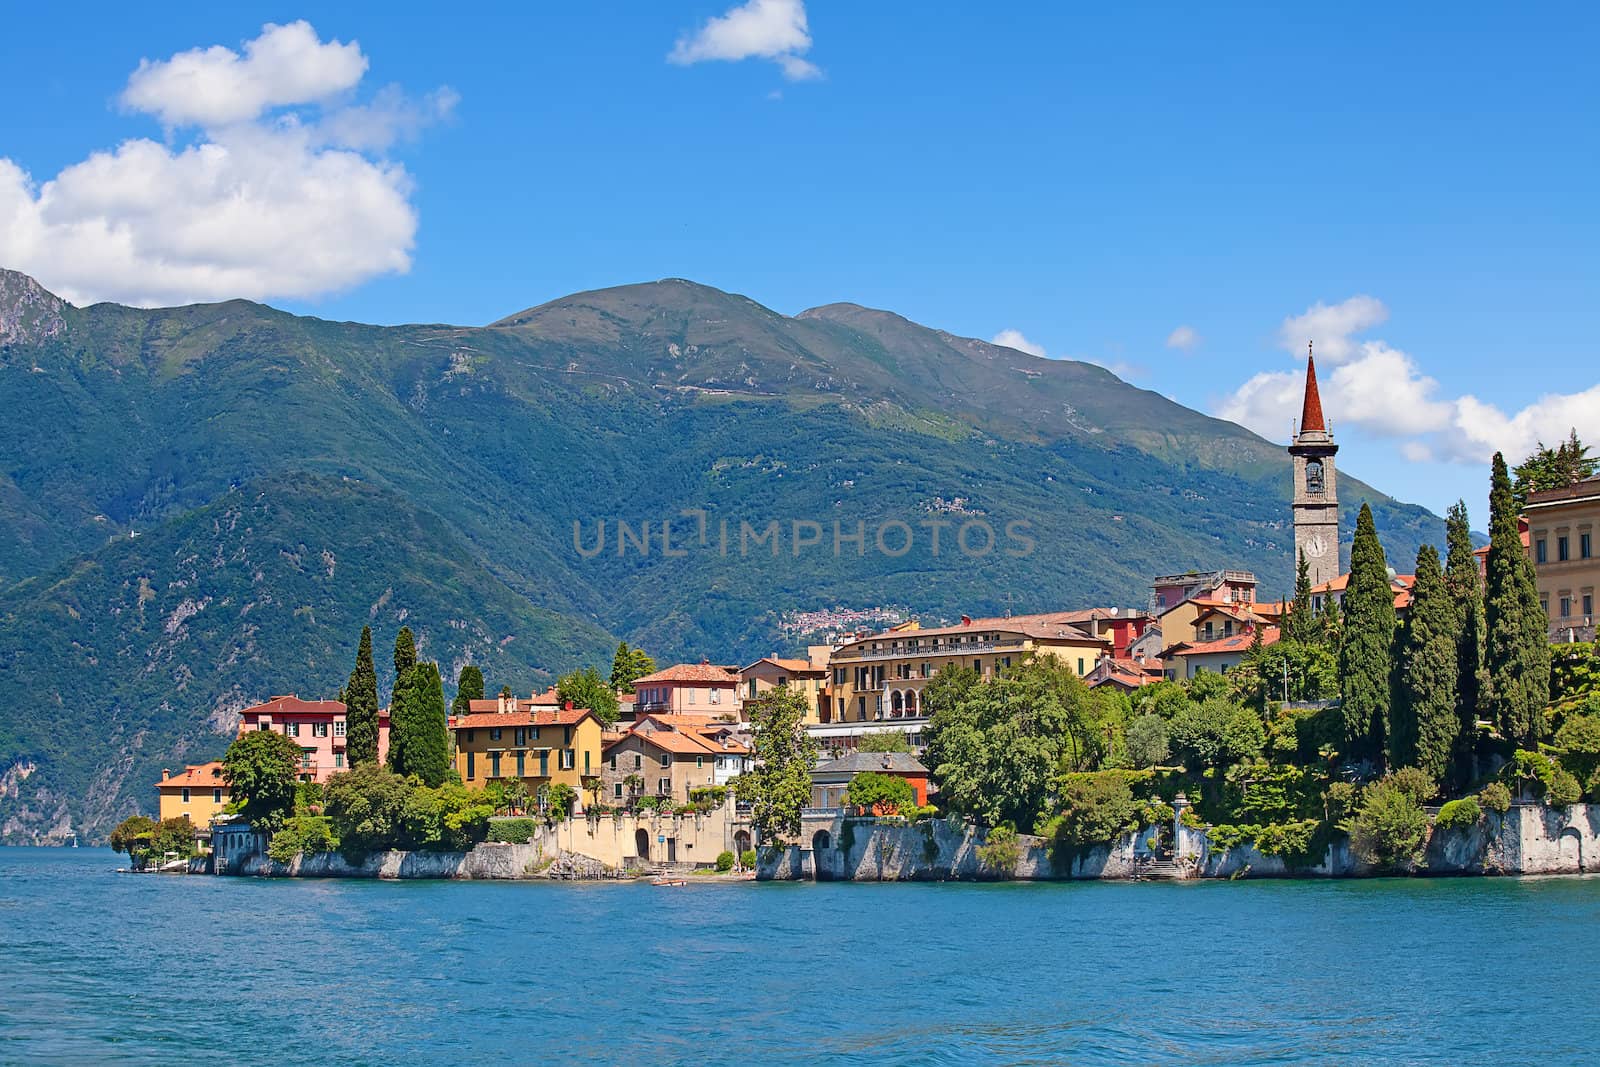 Panoramic view of Varenna town (Como lake, Italy)